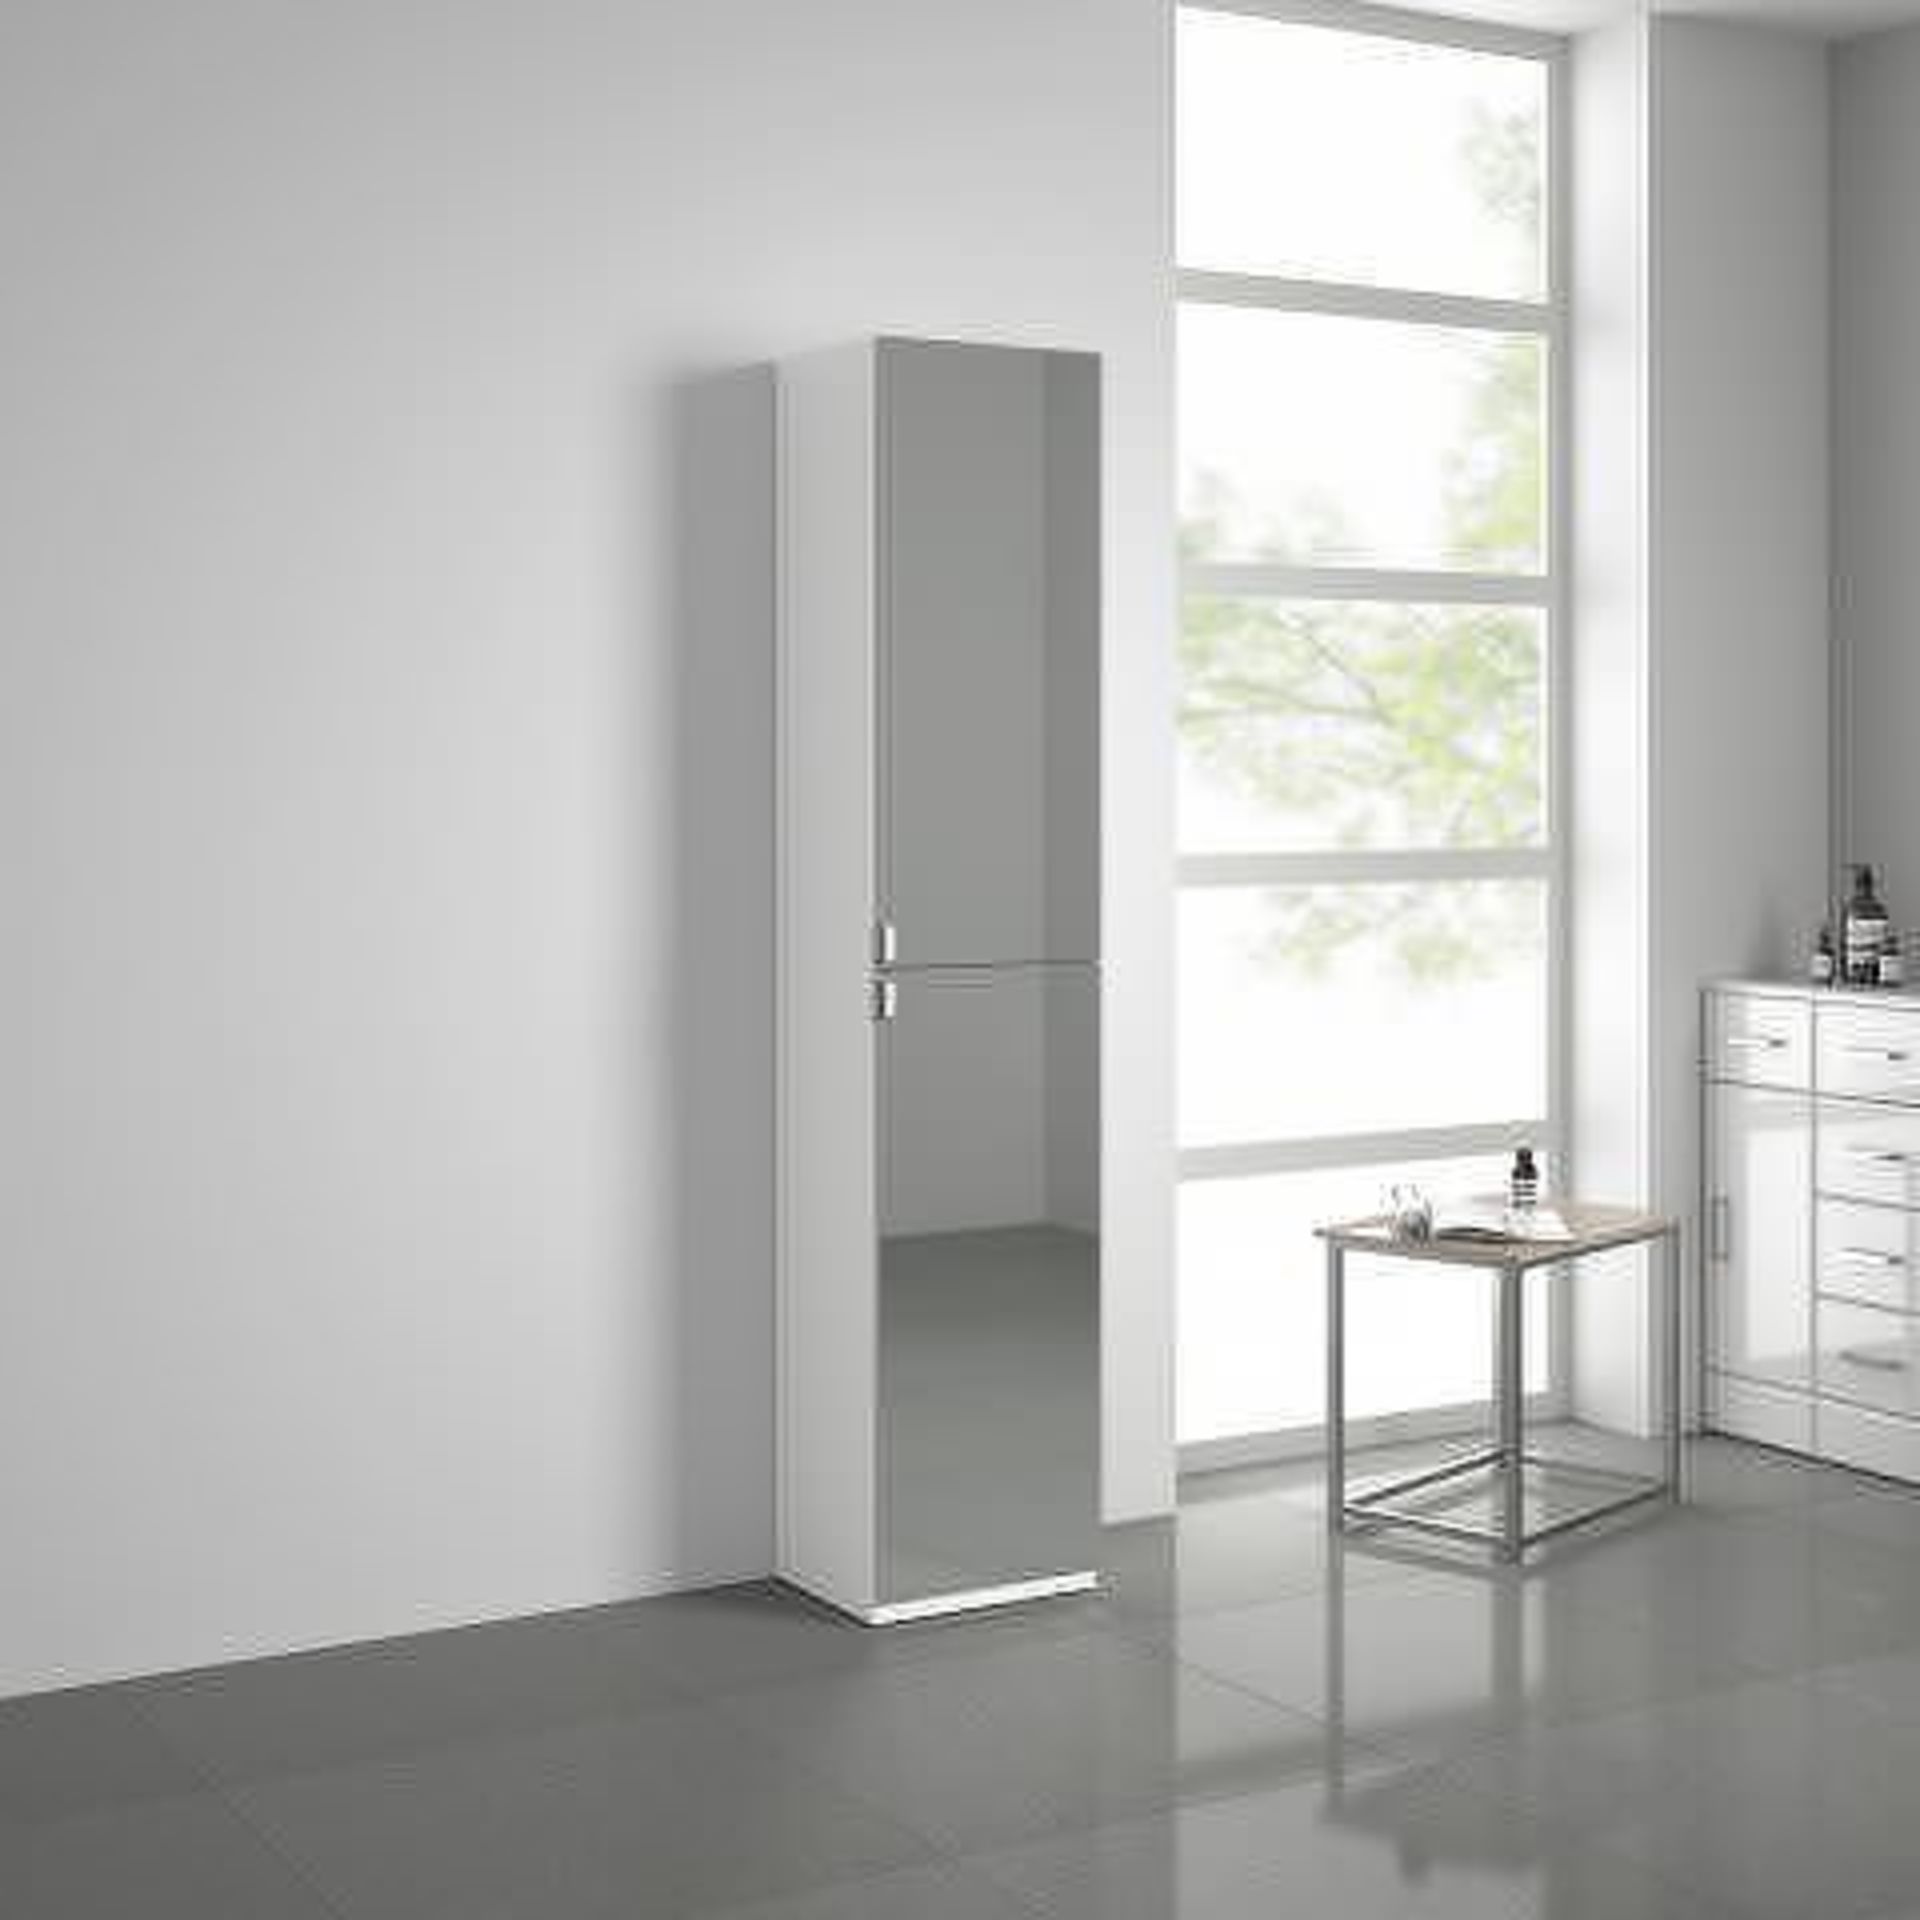 (T130) 1700x350mm Mirrored Door Matte White Tall Storage Cabinet - Floor Standing RRP £339.99 - Image 2 of 4